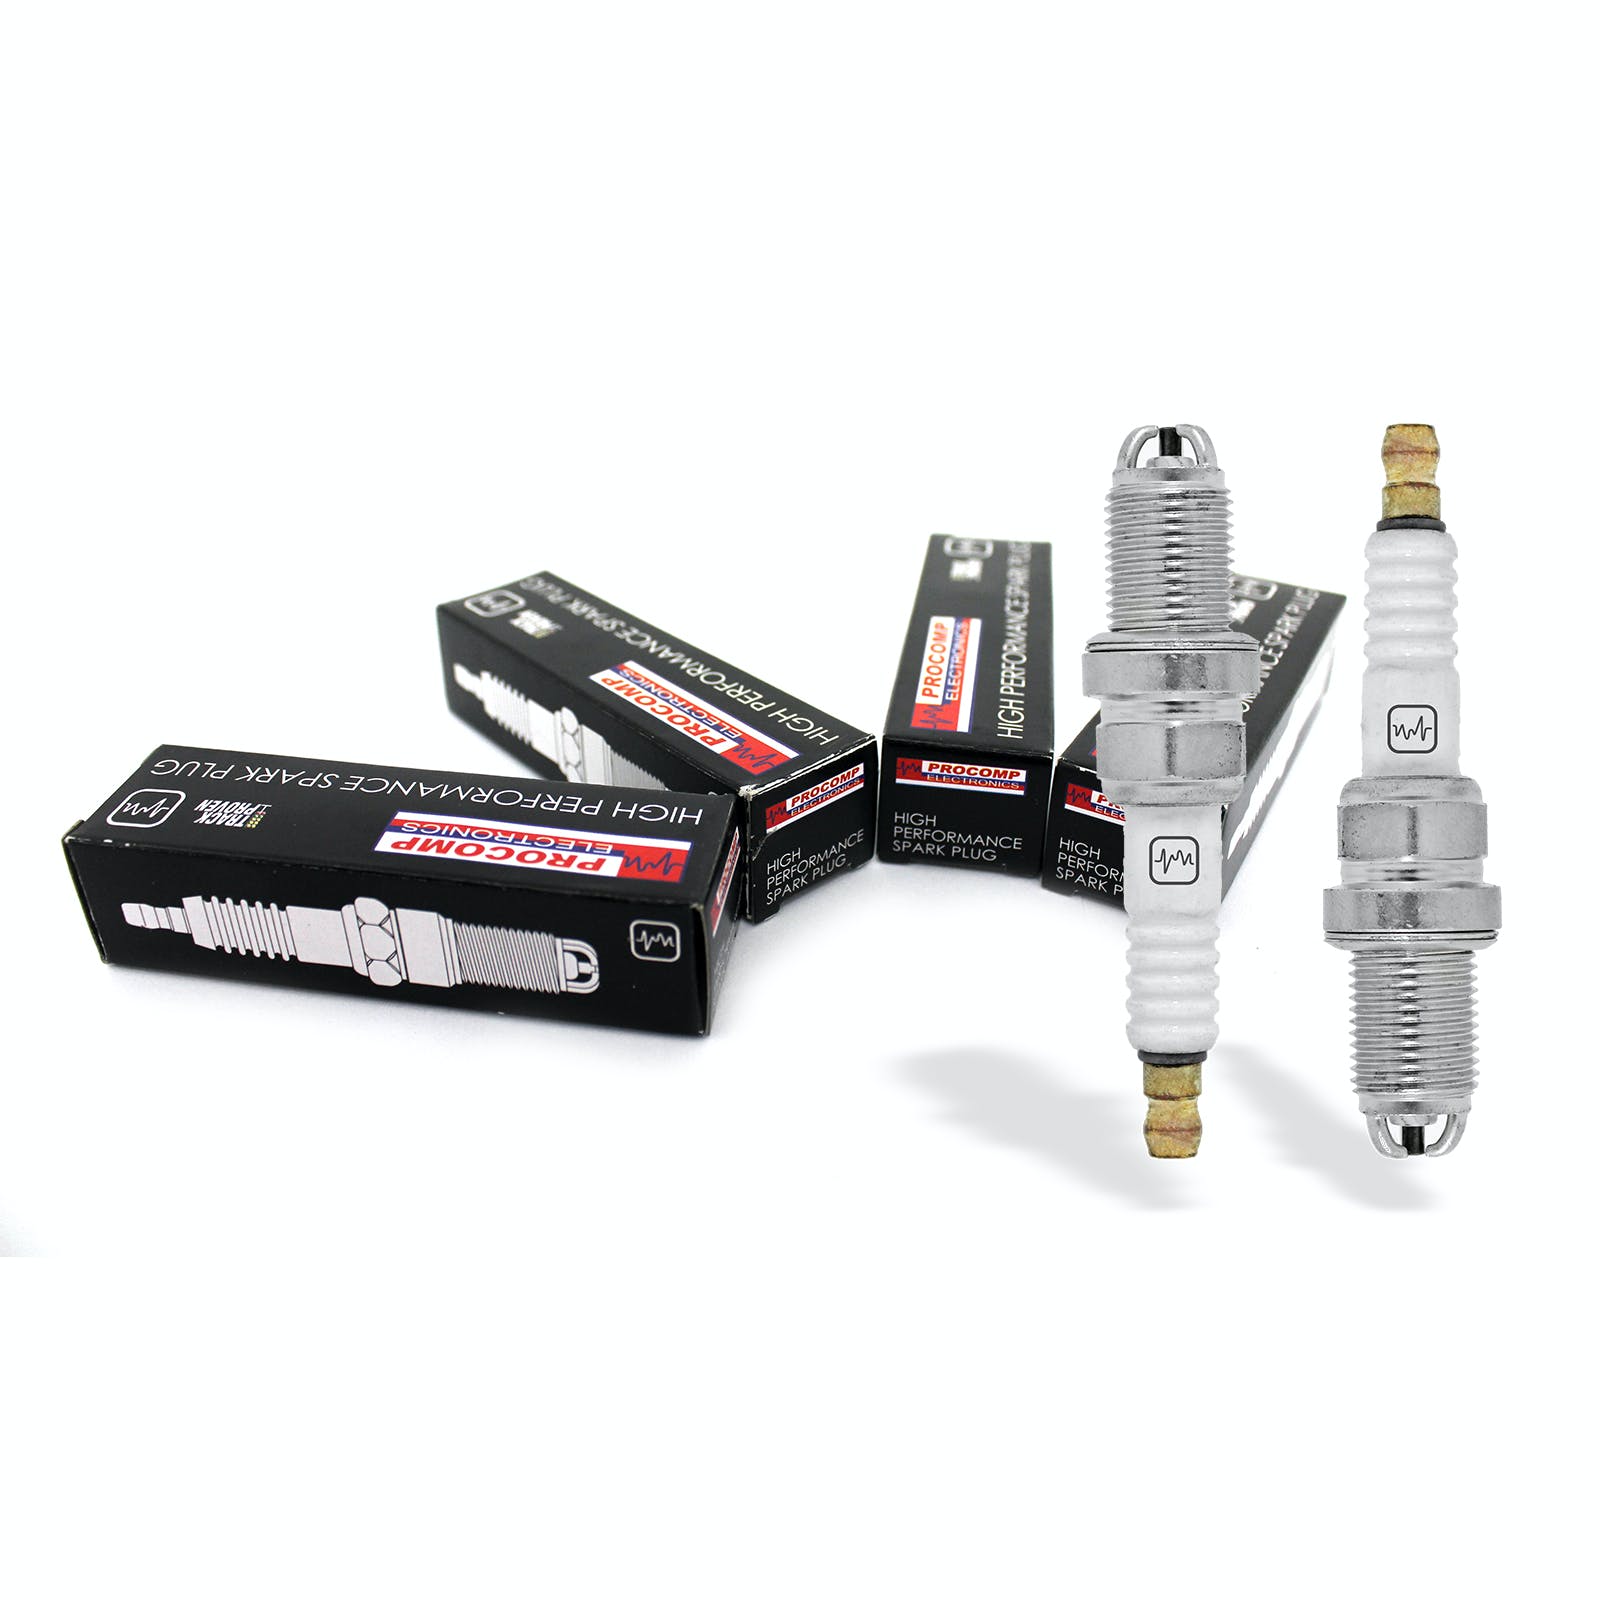 Speedmaster PCE444.1001 Racing Copper Core Gasket Seal Triple Electrode Spark Plugs (Qty. 4)